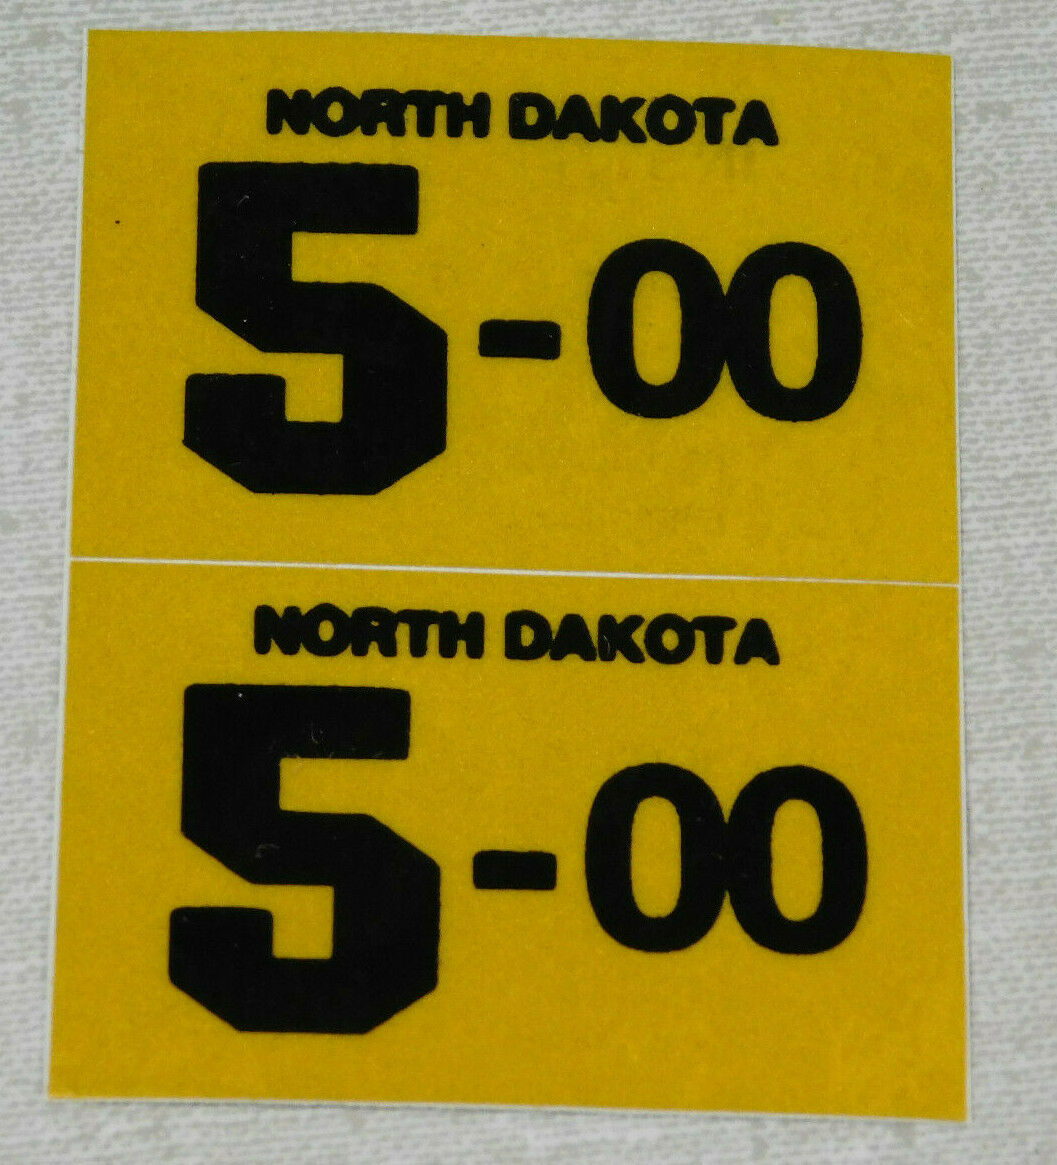 2000 North Dakota Passenger Car License Plate Sticker Pair